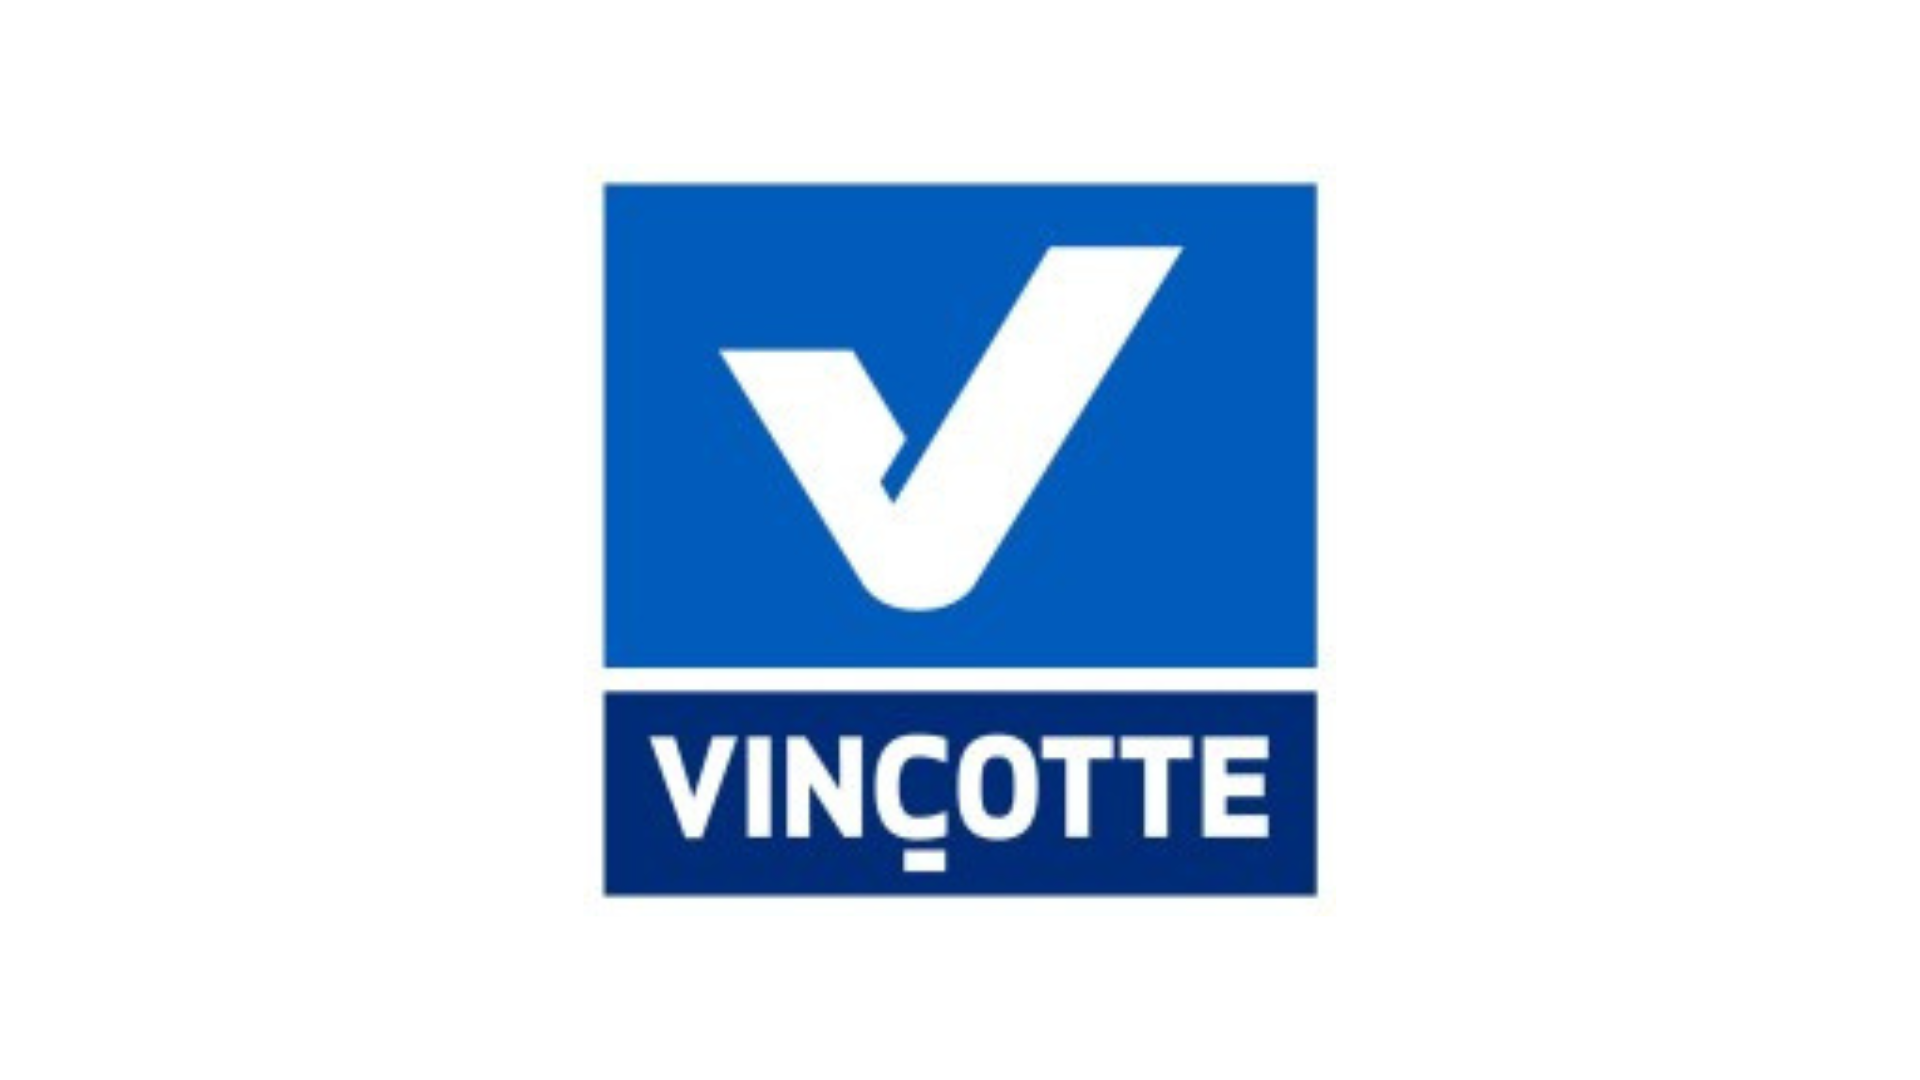 Vincotte Logo Canva No BG.png